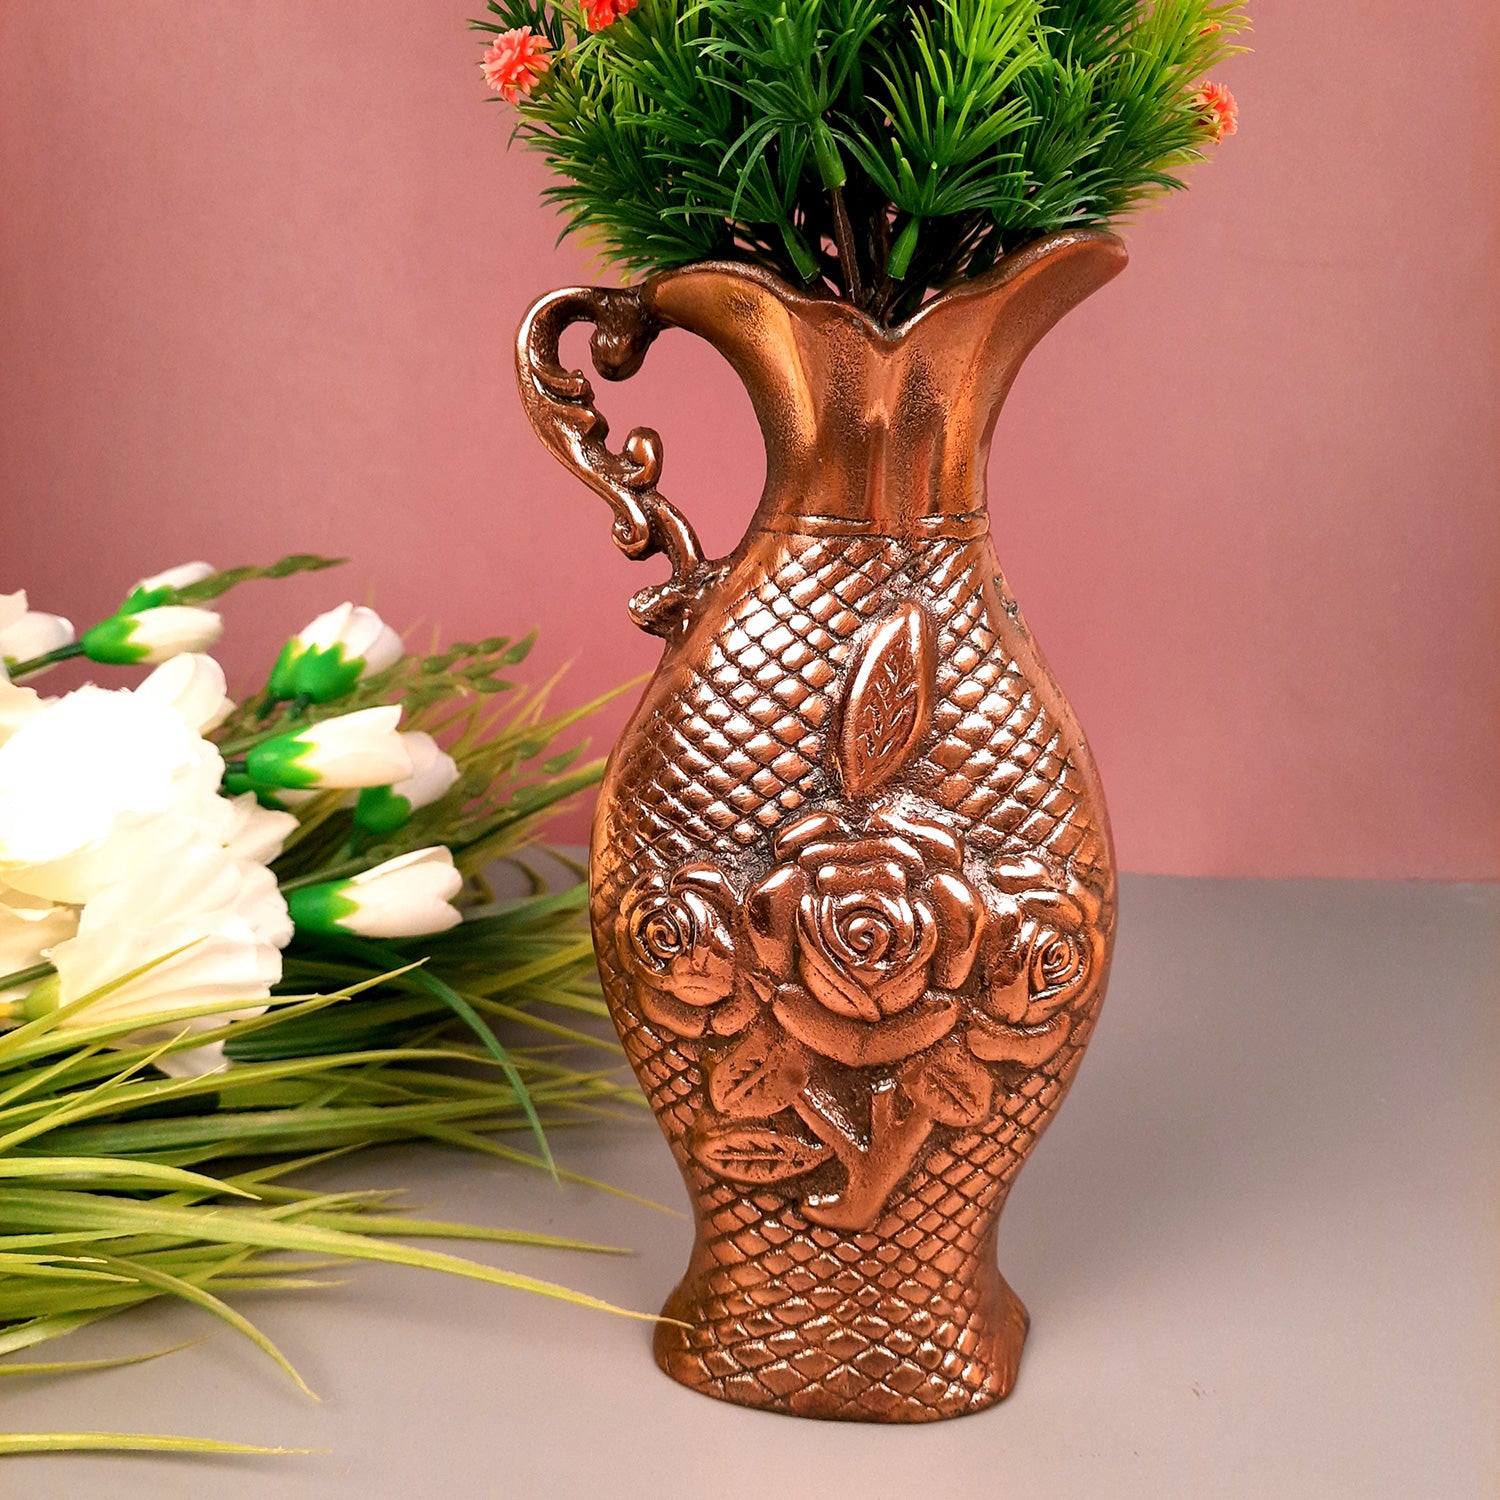 Flower Vase | Pots for Flowers - Metal - For Tabletop, Living Room, Home & Office Decoration | Centerpiece for Table Decoration |Vases for Gifts - 10 Inch